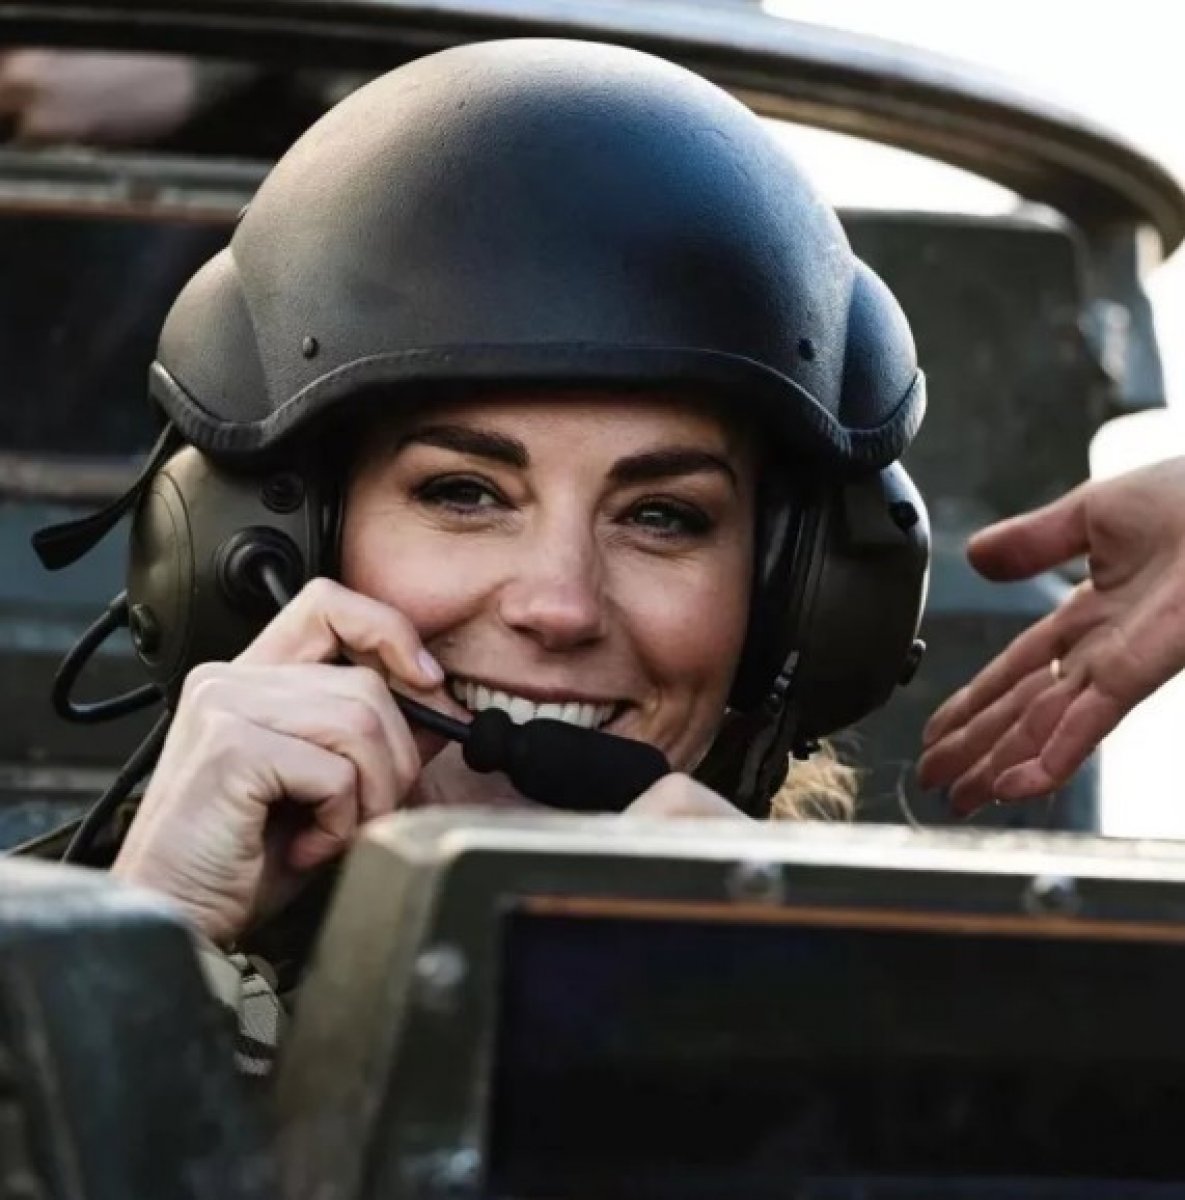 Kate Middleton dan askeri üniformalı tank pozu #1